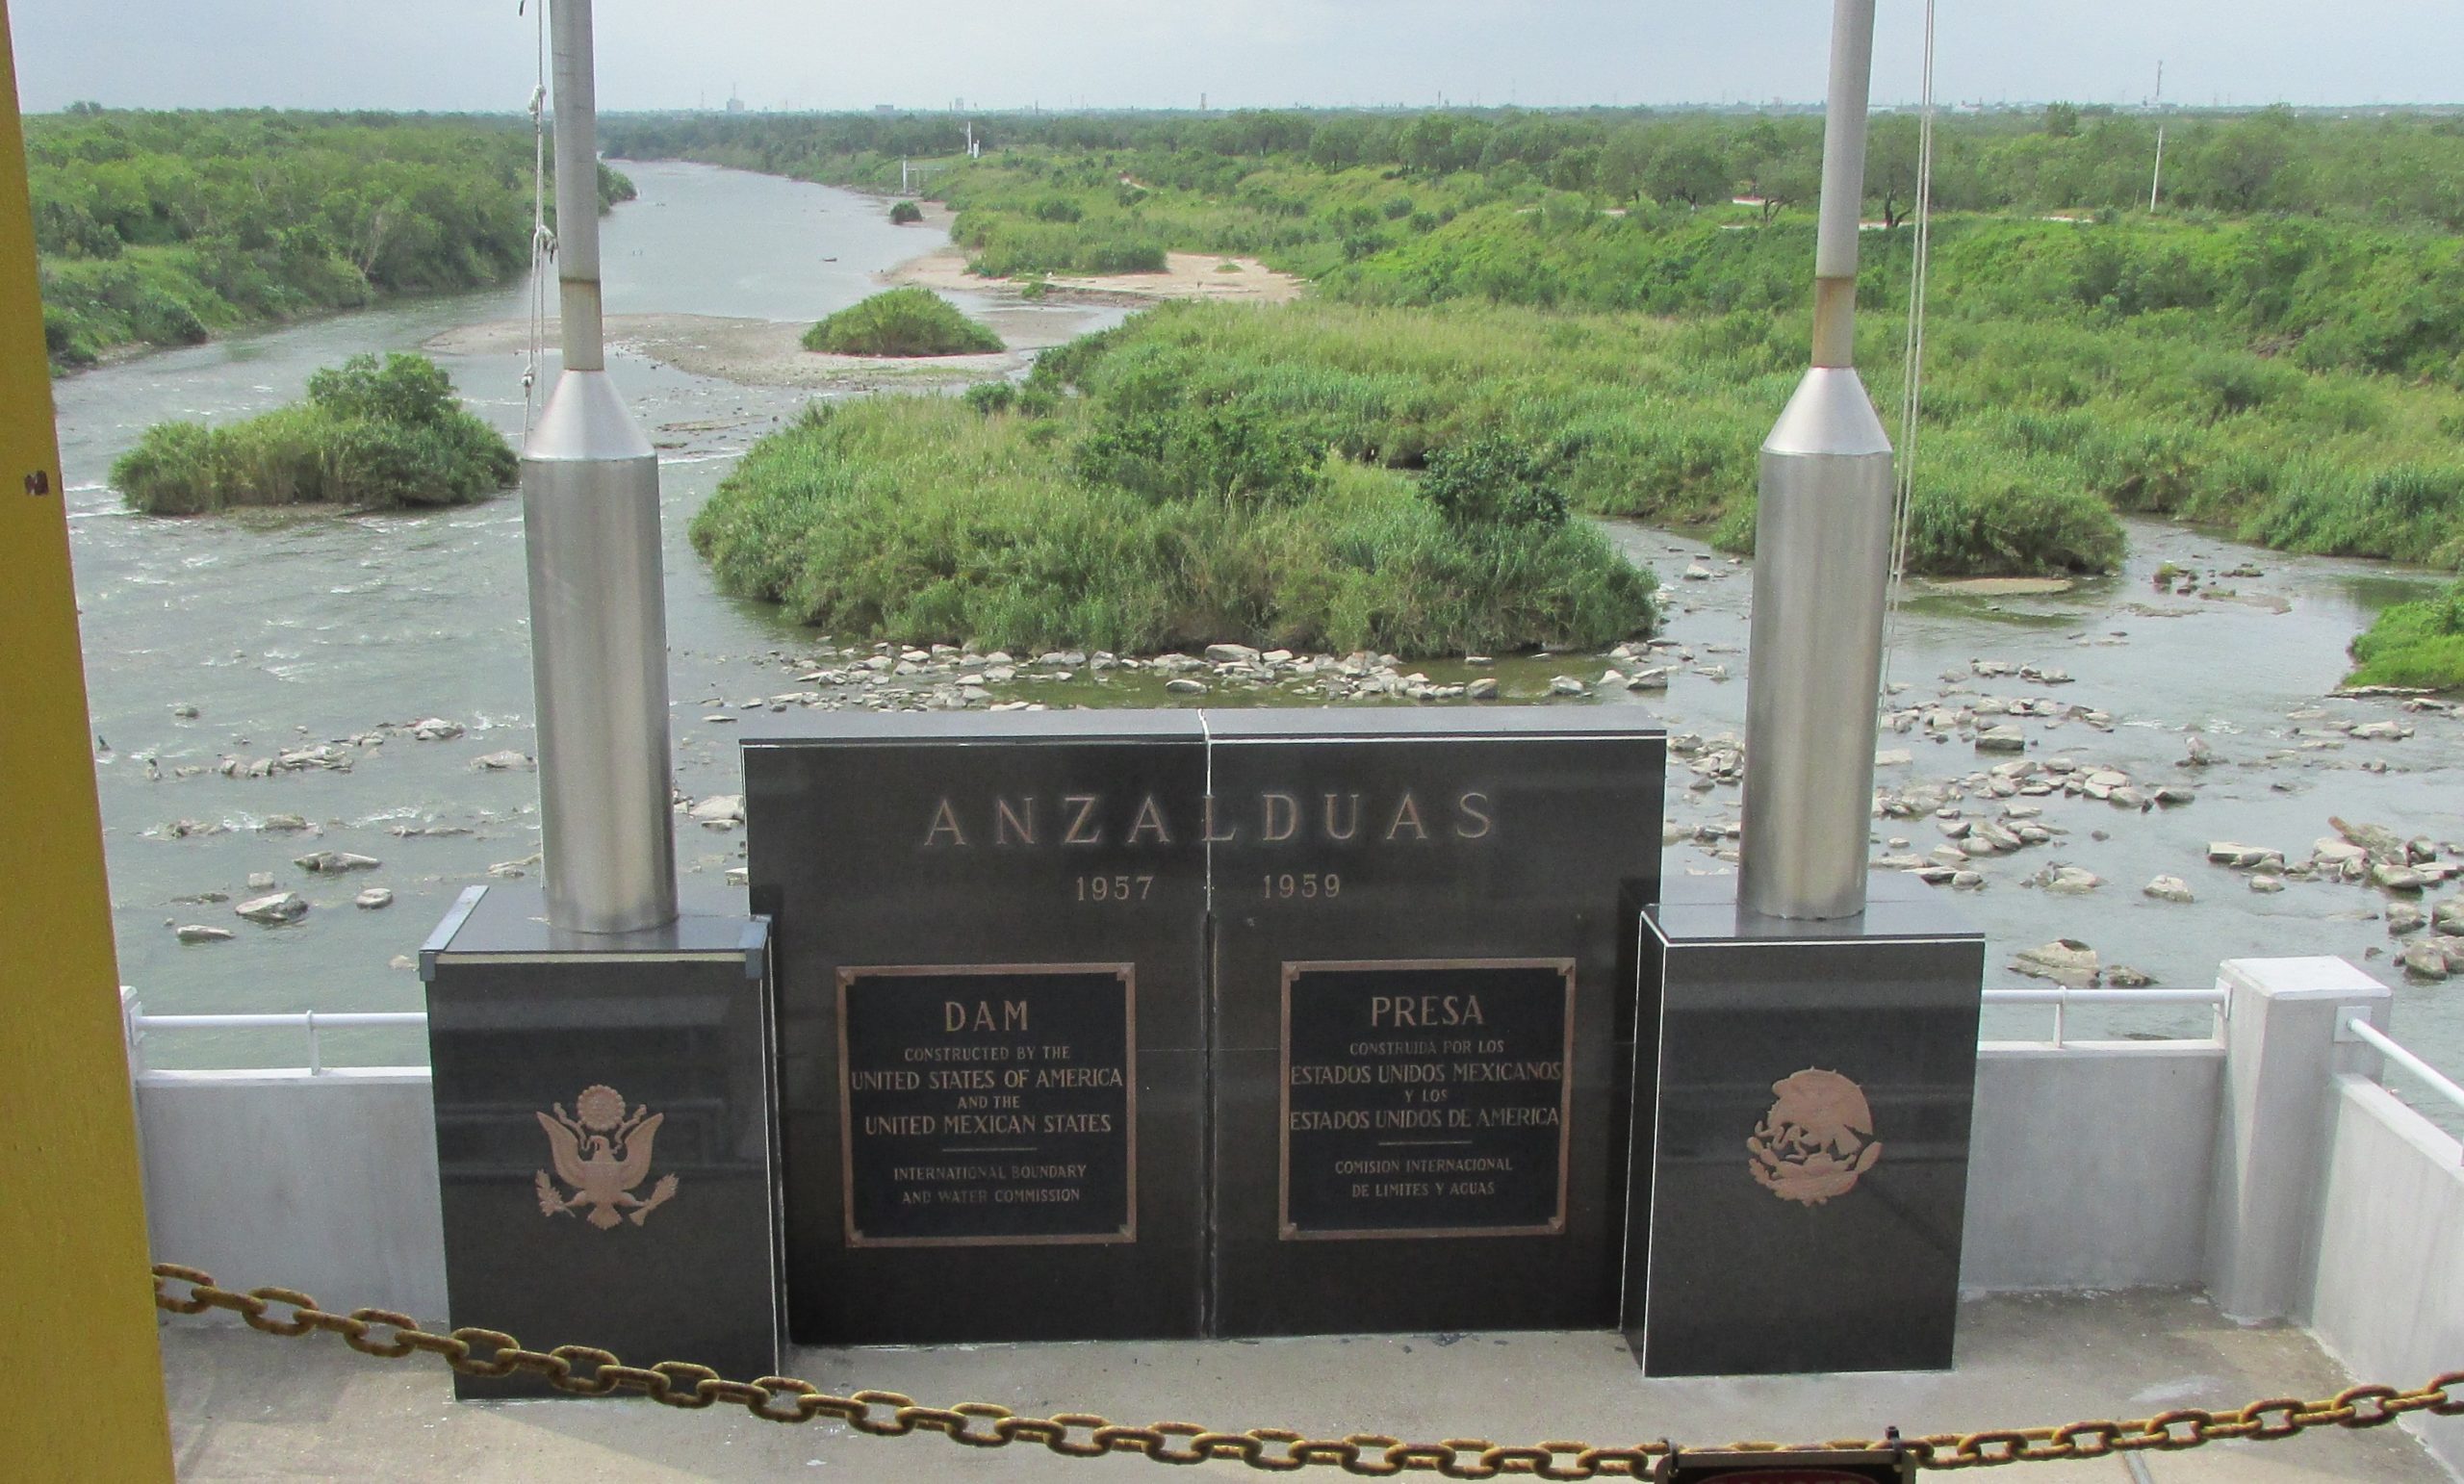 Plaque at International Boundary on Anzalduas Dam